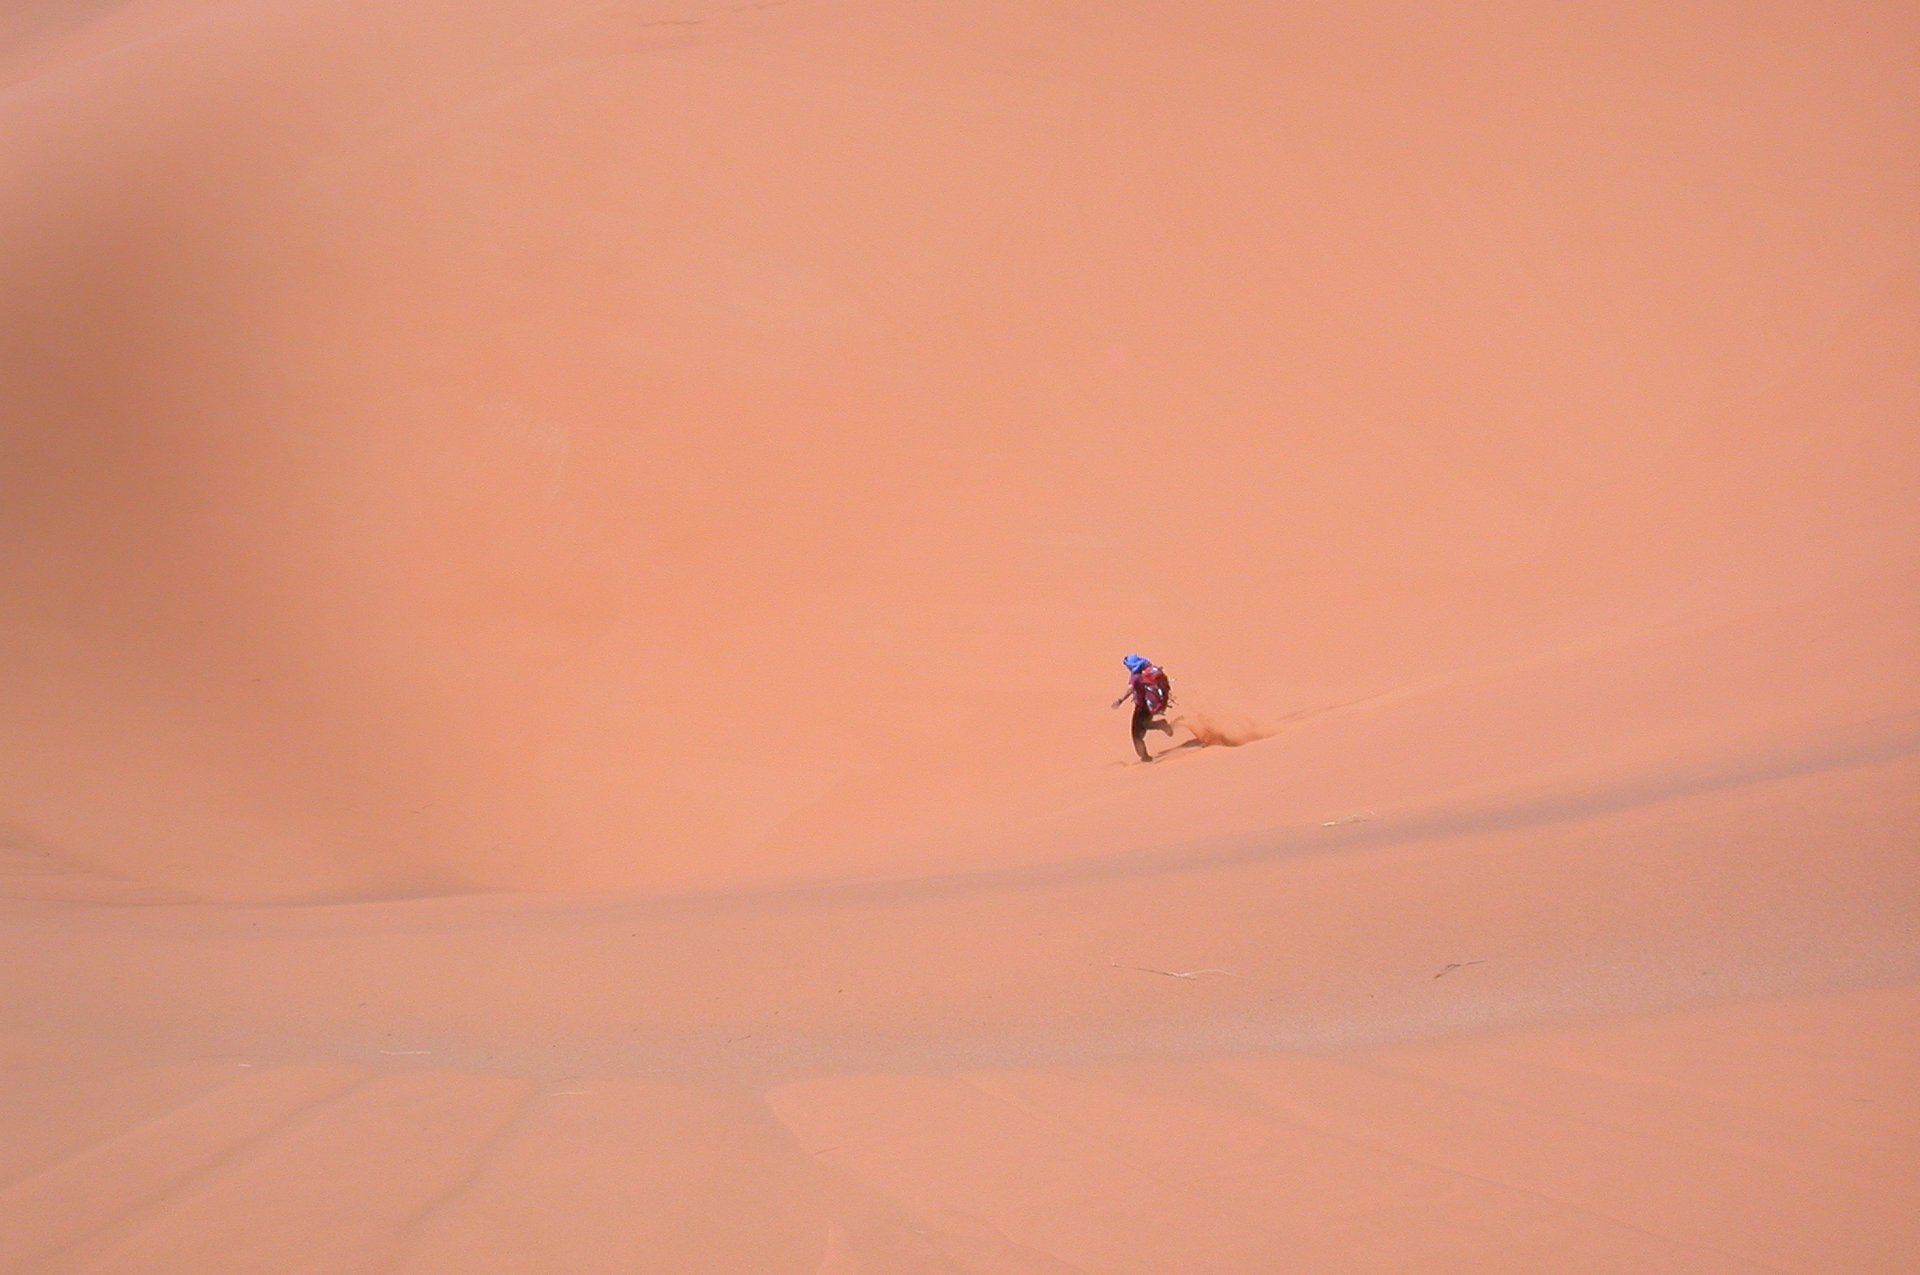 Trekking en el desierto